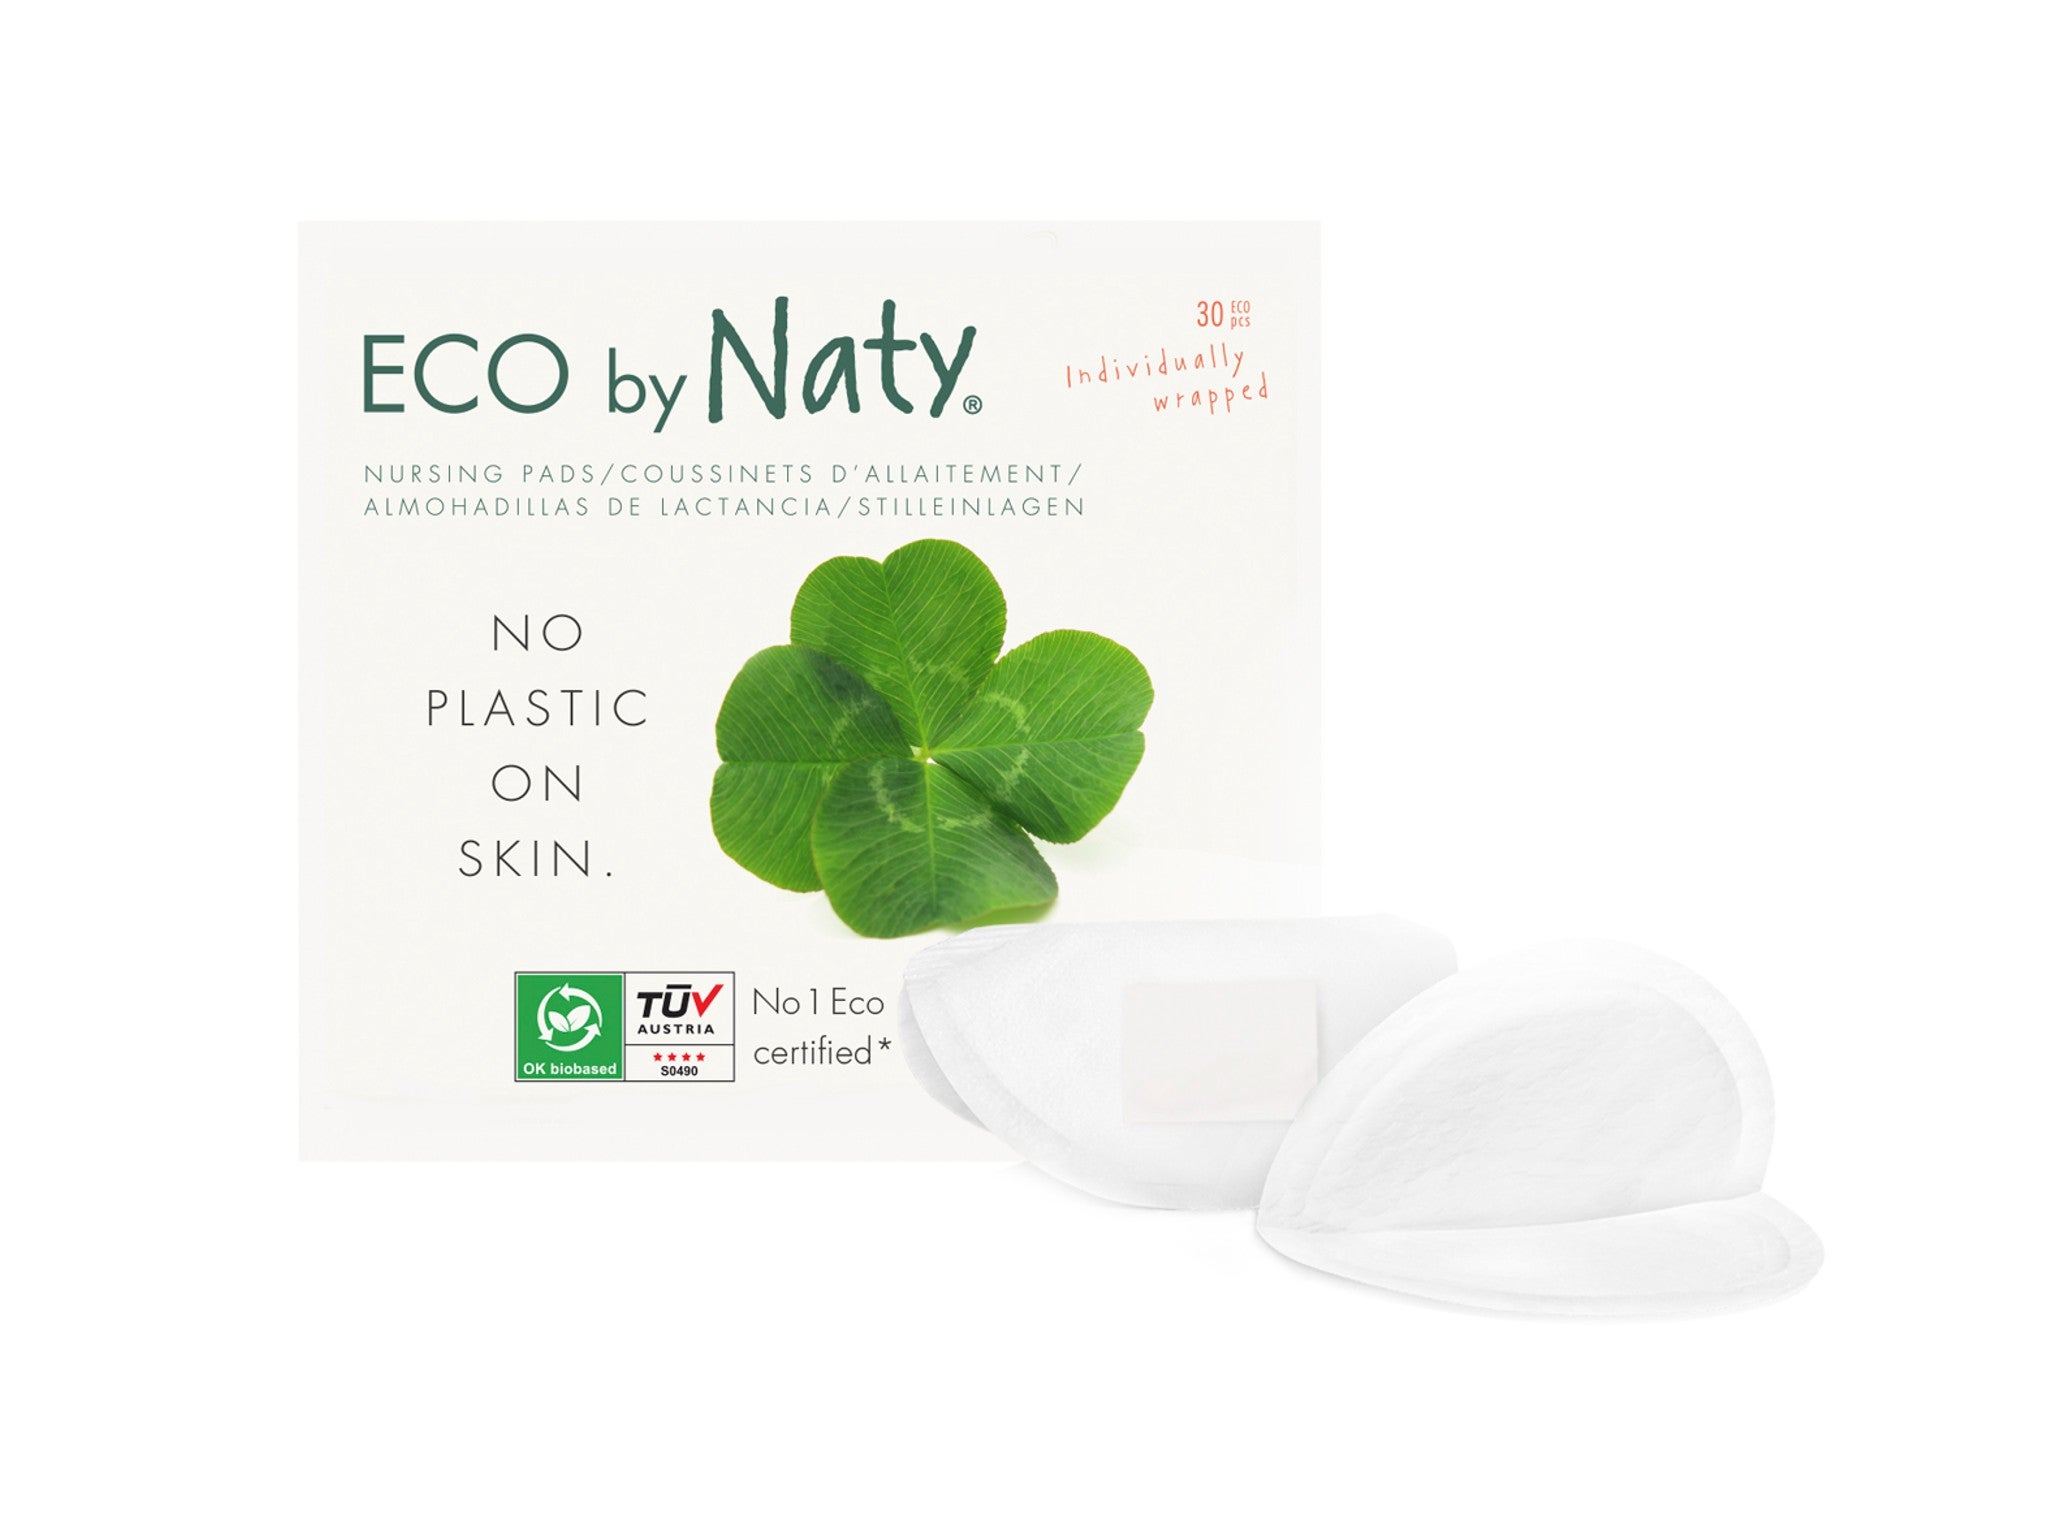 Eco by Naty nursing pads indybest.jpg